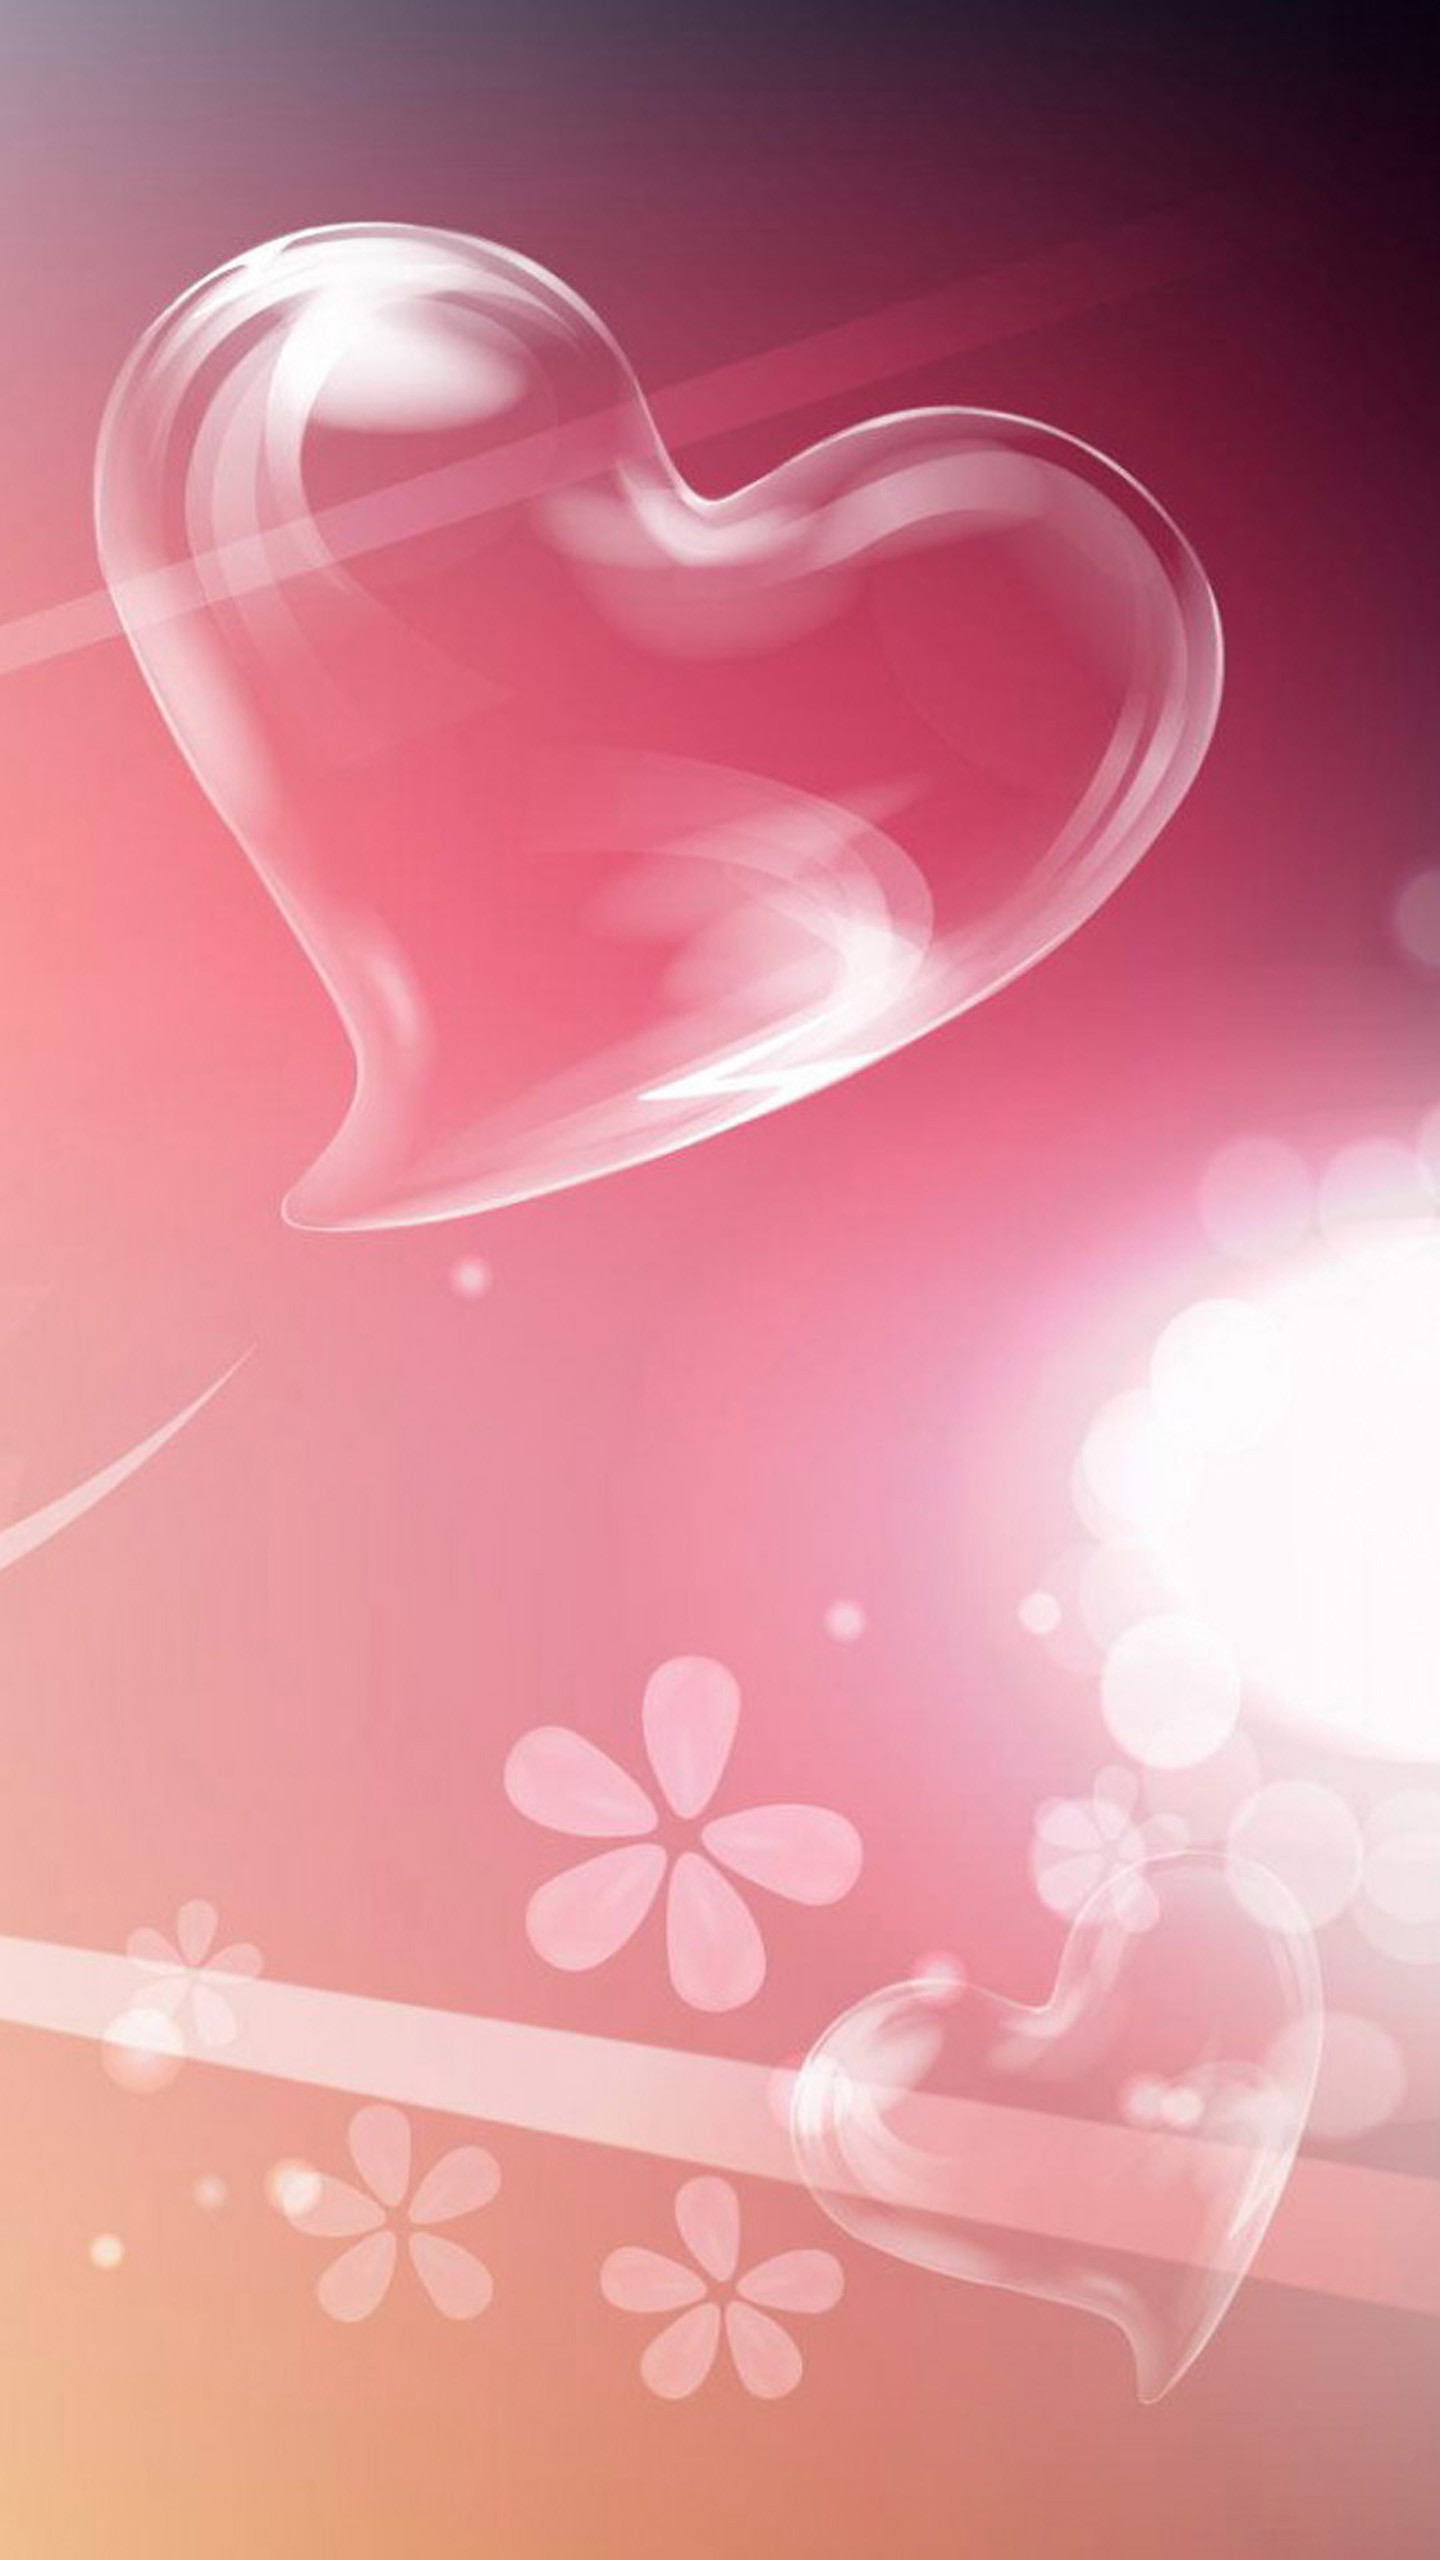 1440x2560, Pink Love Heart Bubble Mobile Wallpaper - Love Wallpapers For Mobile - HD Wallpaper 